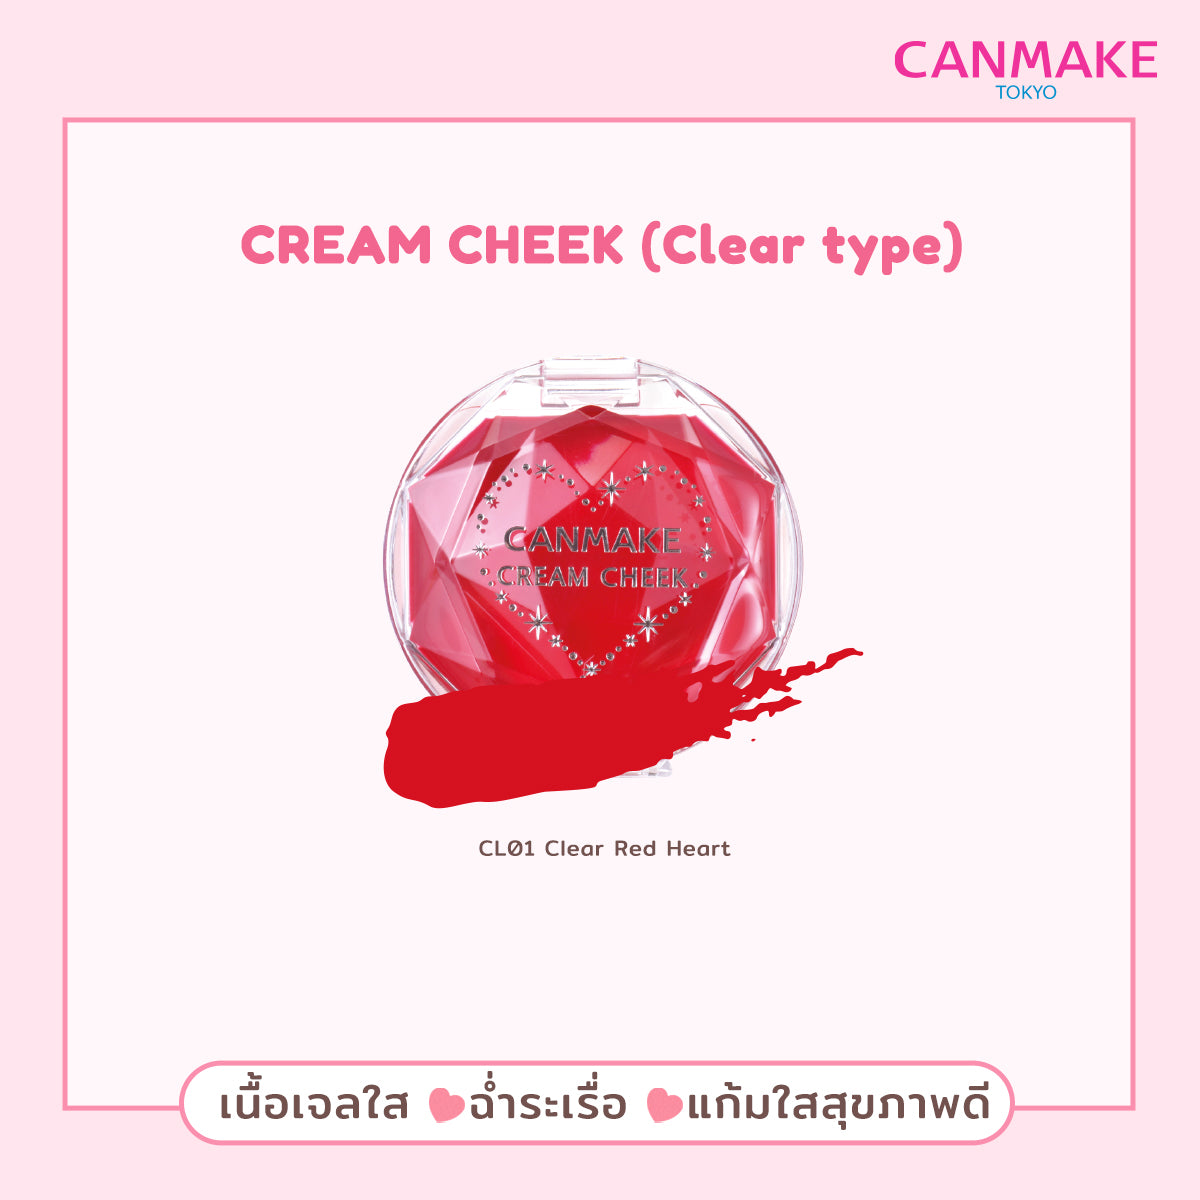 Canmake Cream Cheek Pearl - Mousse - Gel Type : แคนเมค ครีม บลัชชออน ปัดแก้ม เนื้อนุ่ม x 1 ชิ้น